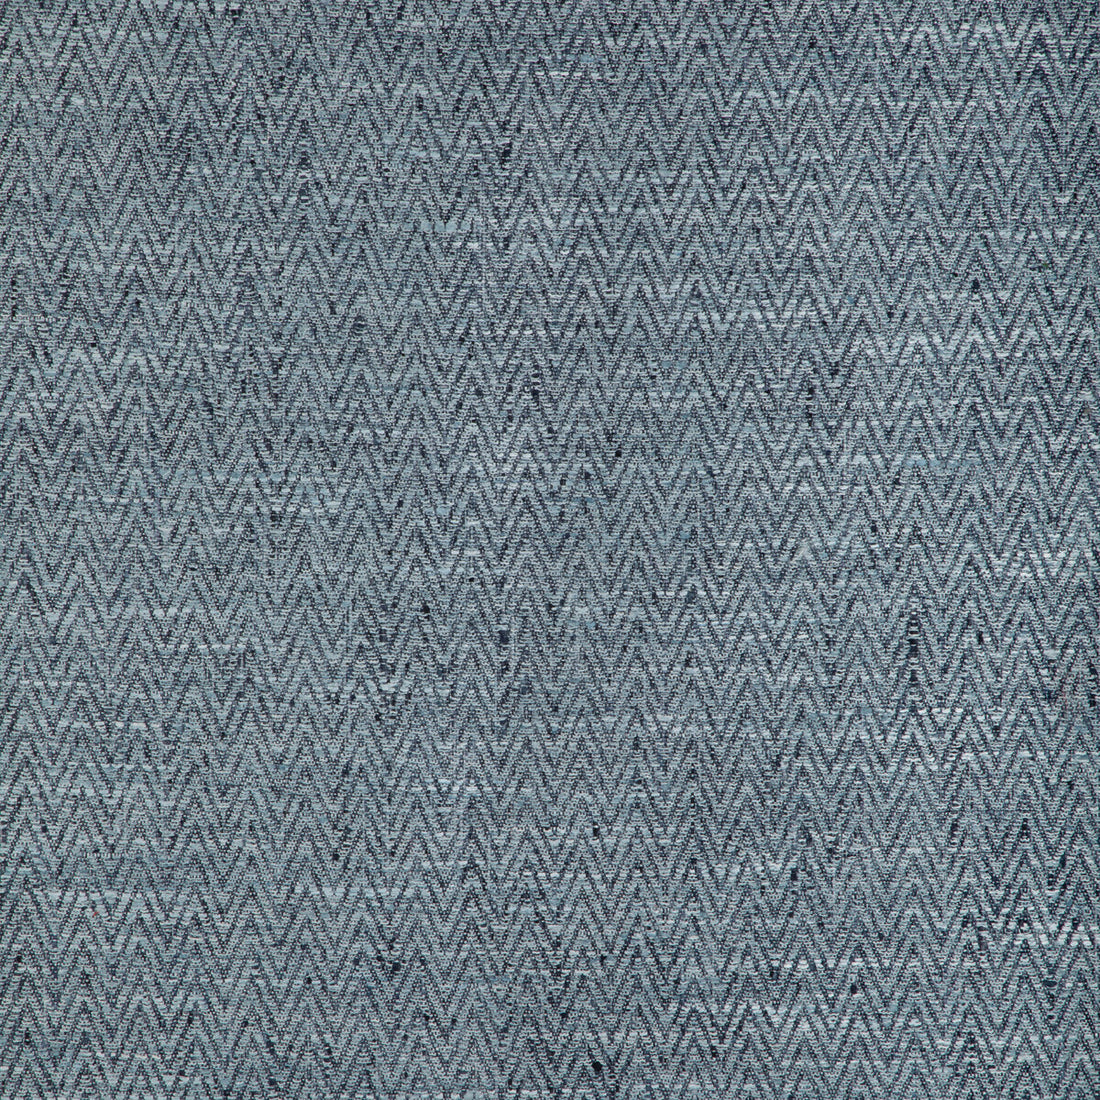 Kravet Smart fabric in 34092-55 color - pattern 34092.55.0 - by Kravet Smart